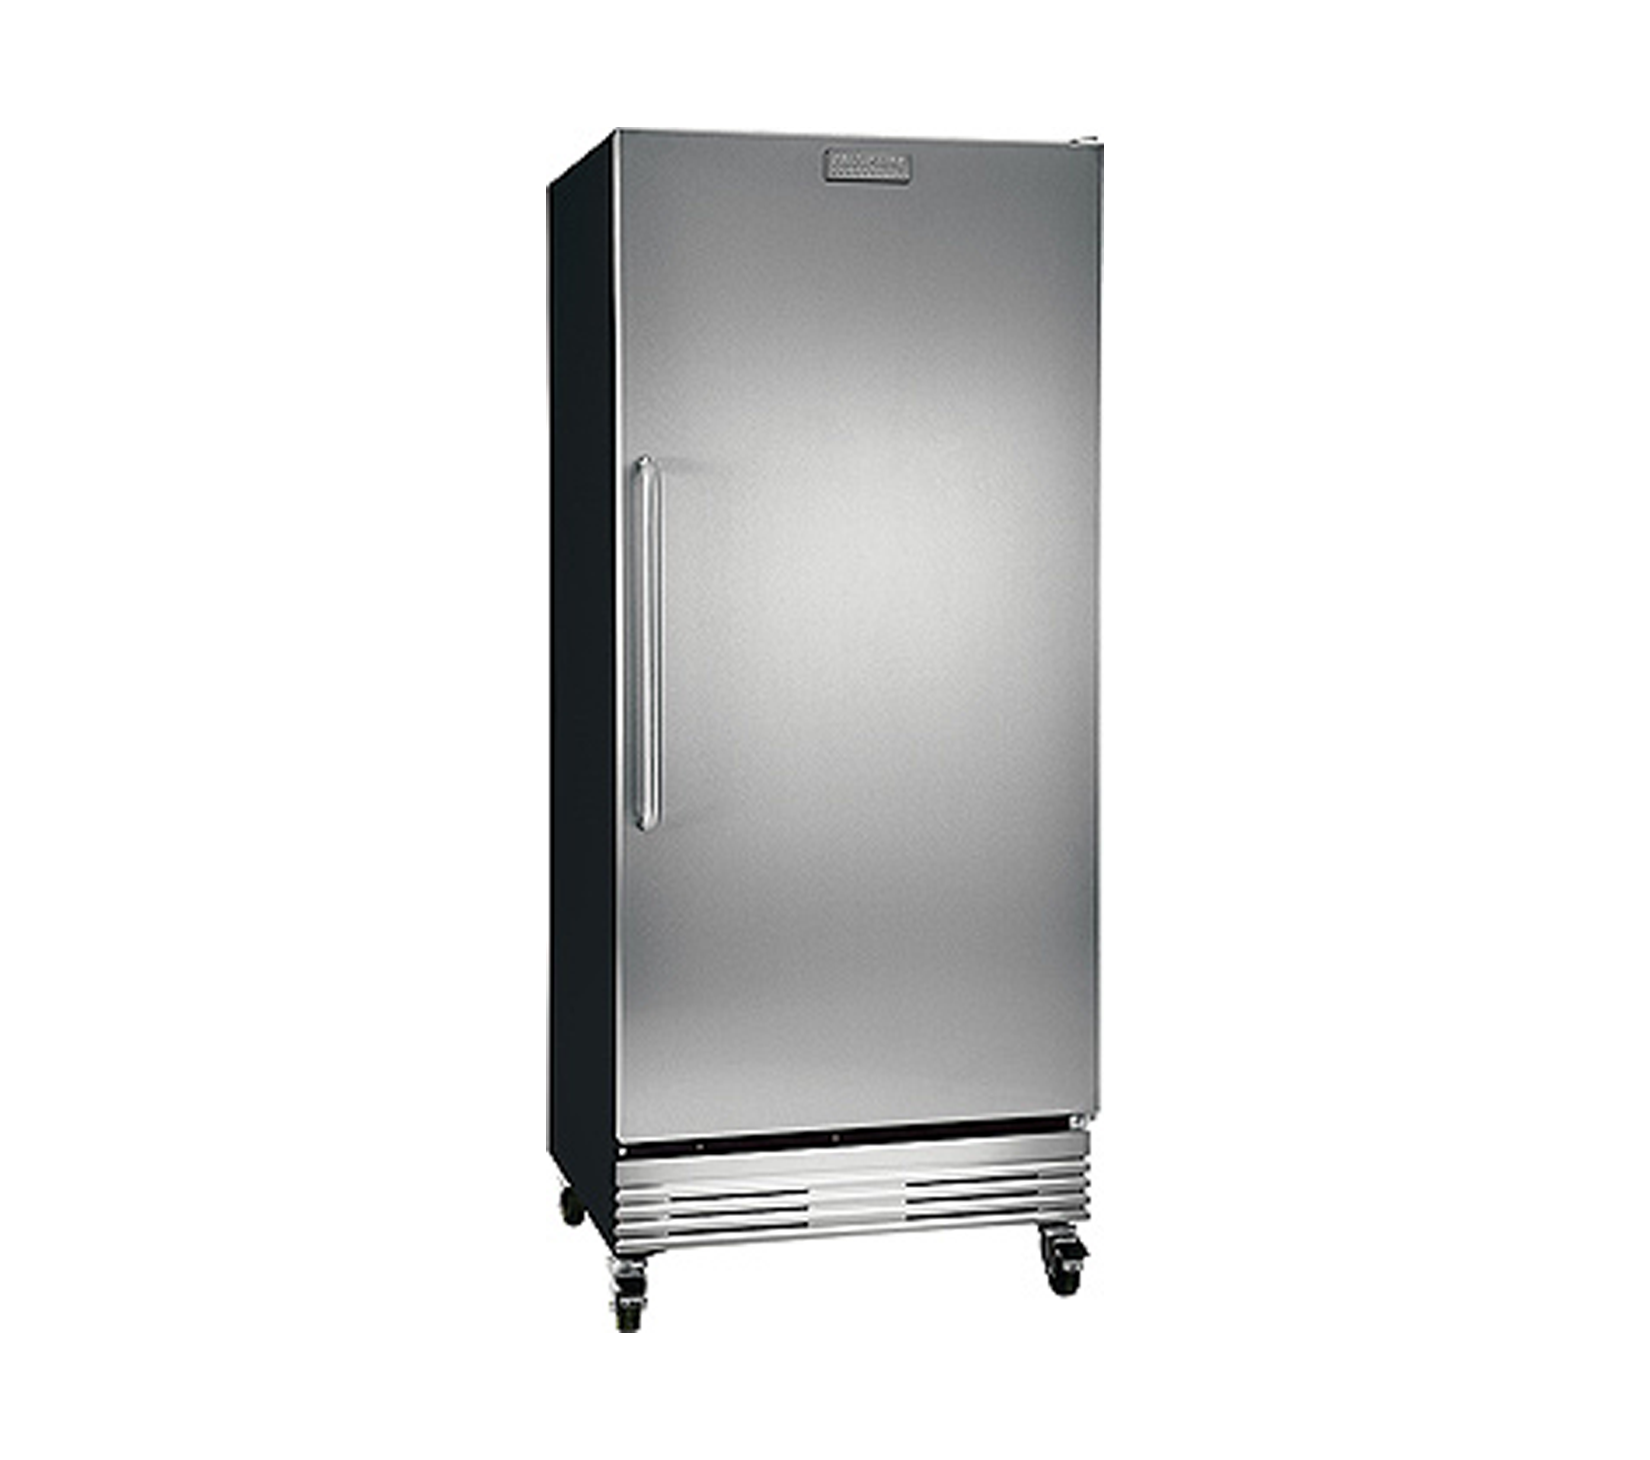 Commercial Freezer – Allie's Party Equipment Rentals